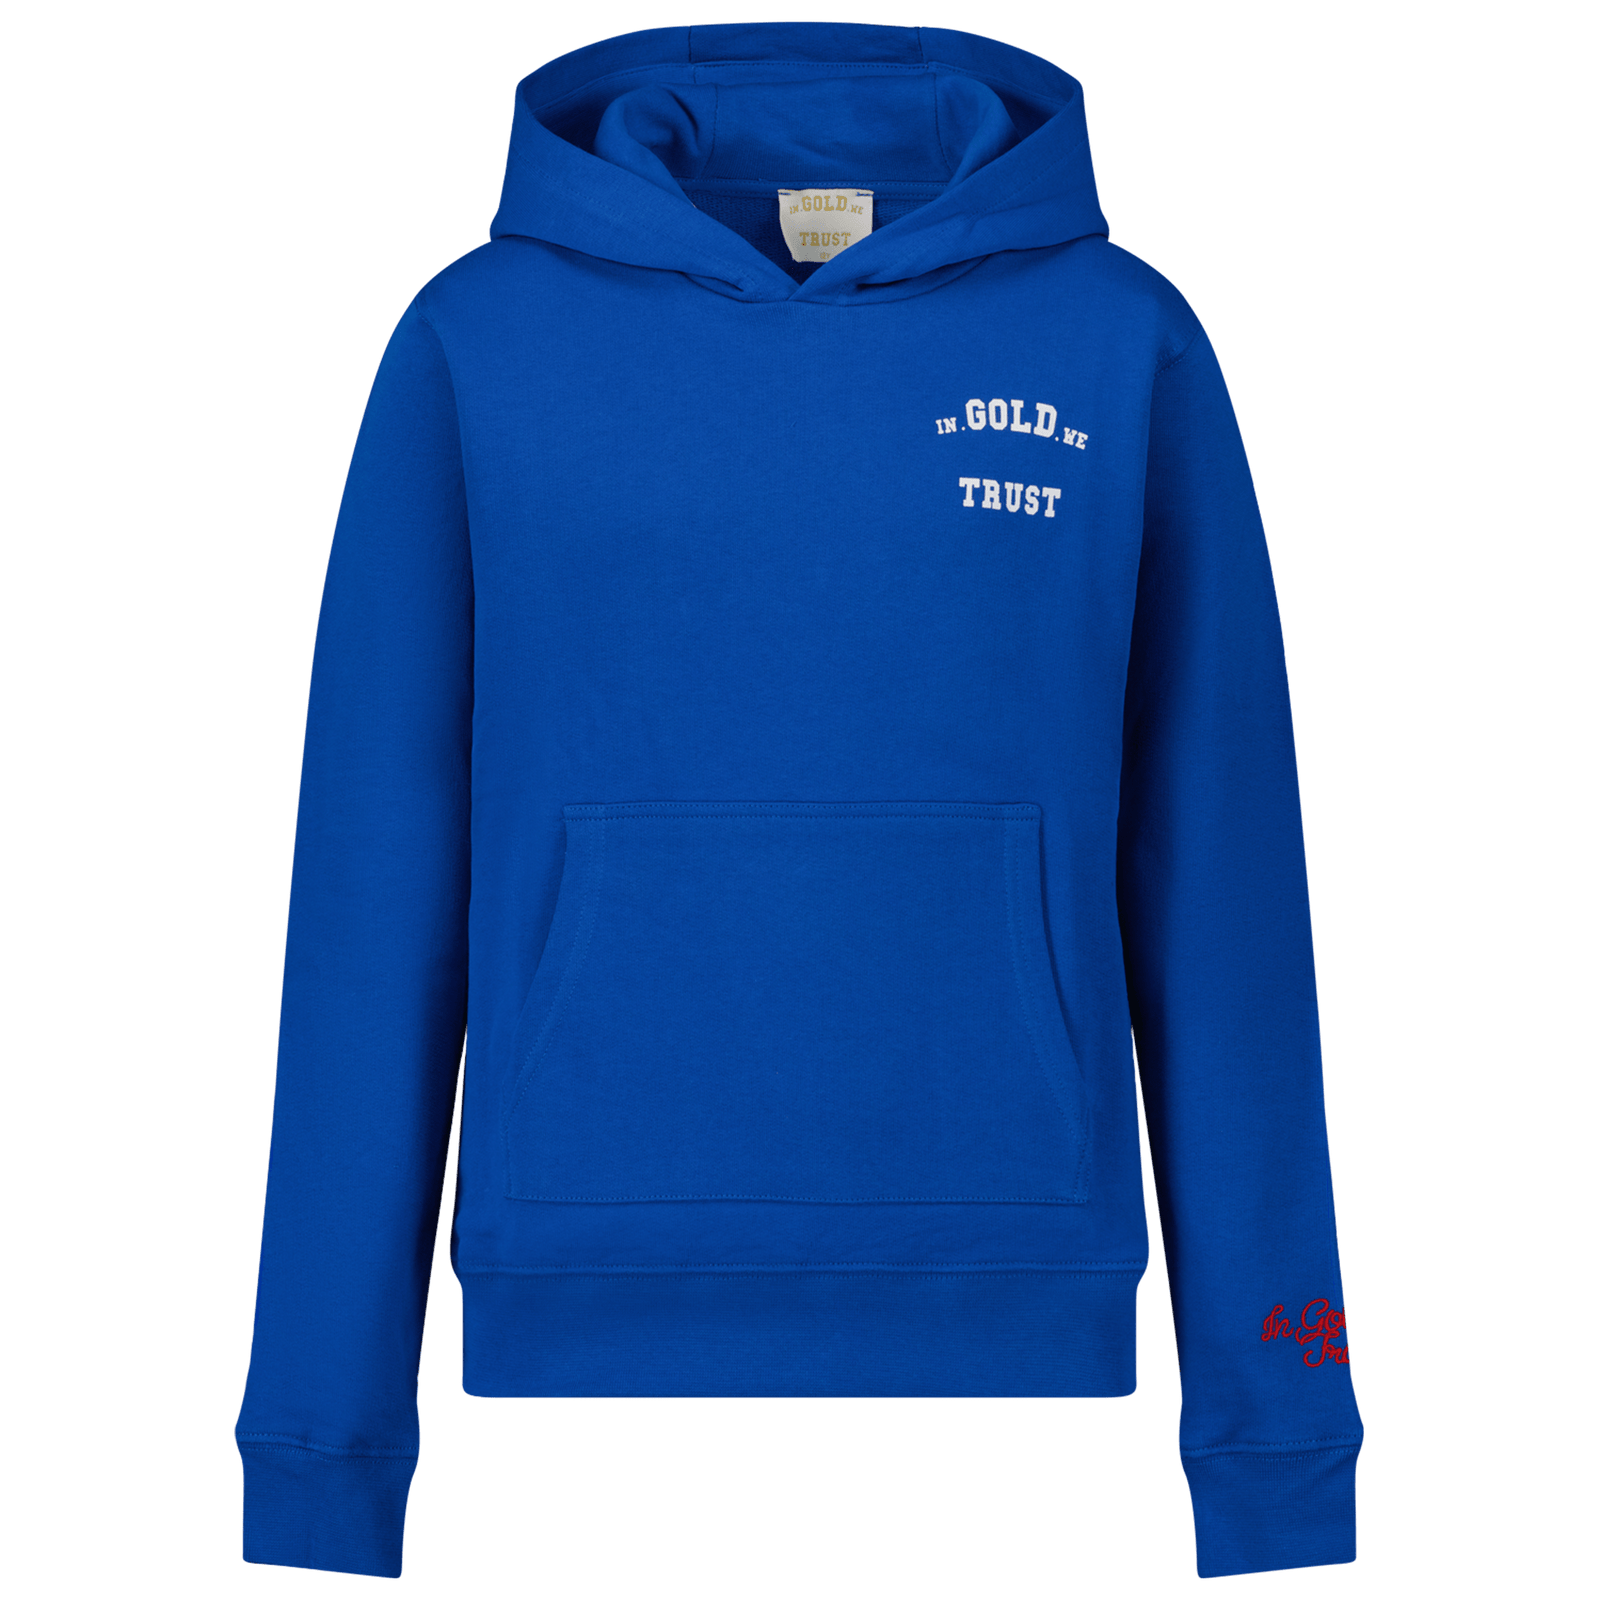 In Gold We Trust Kids Unisex Sweater Blue